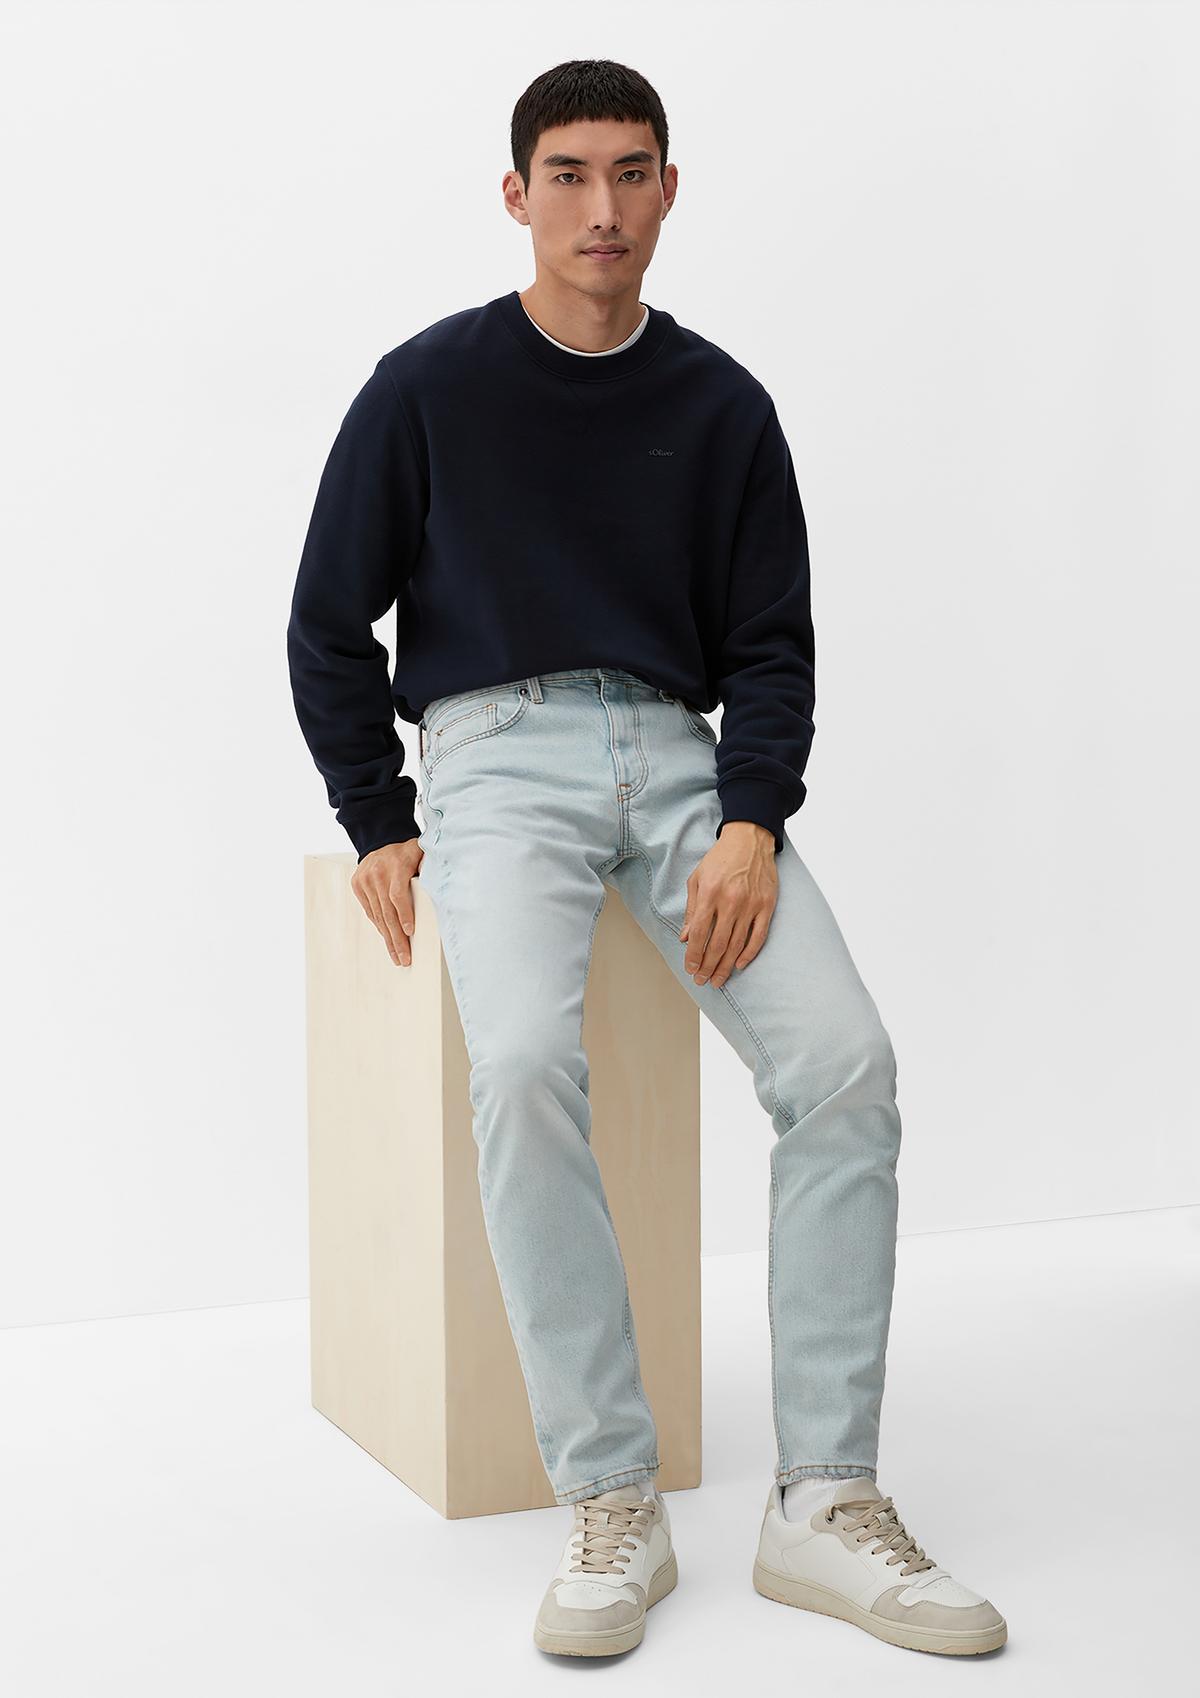 leg Jeans / fit light mid blue / straight - / regular rise